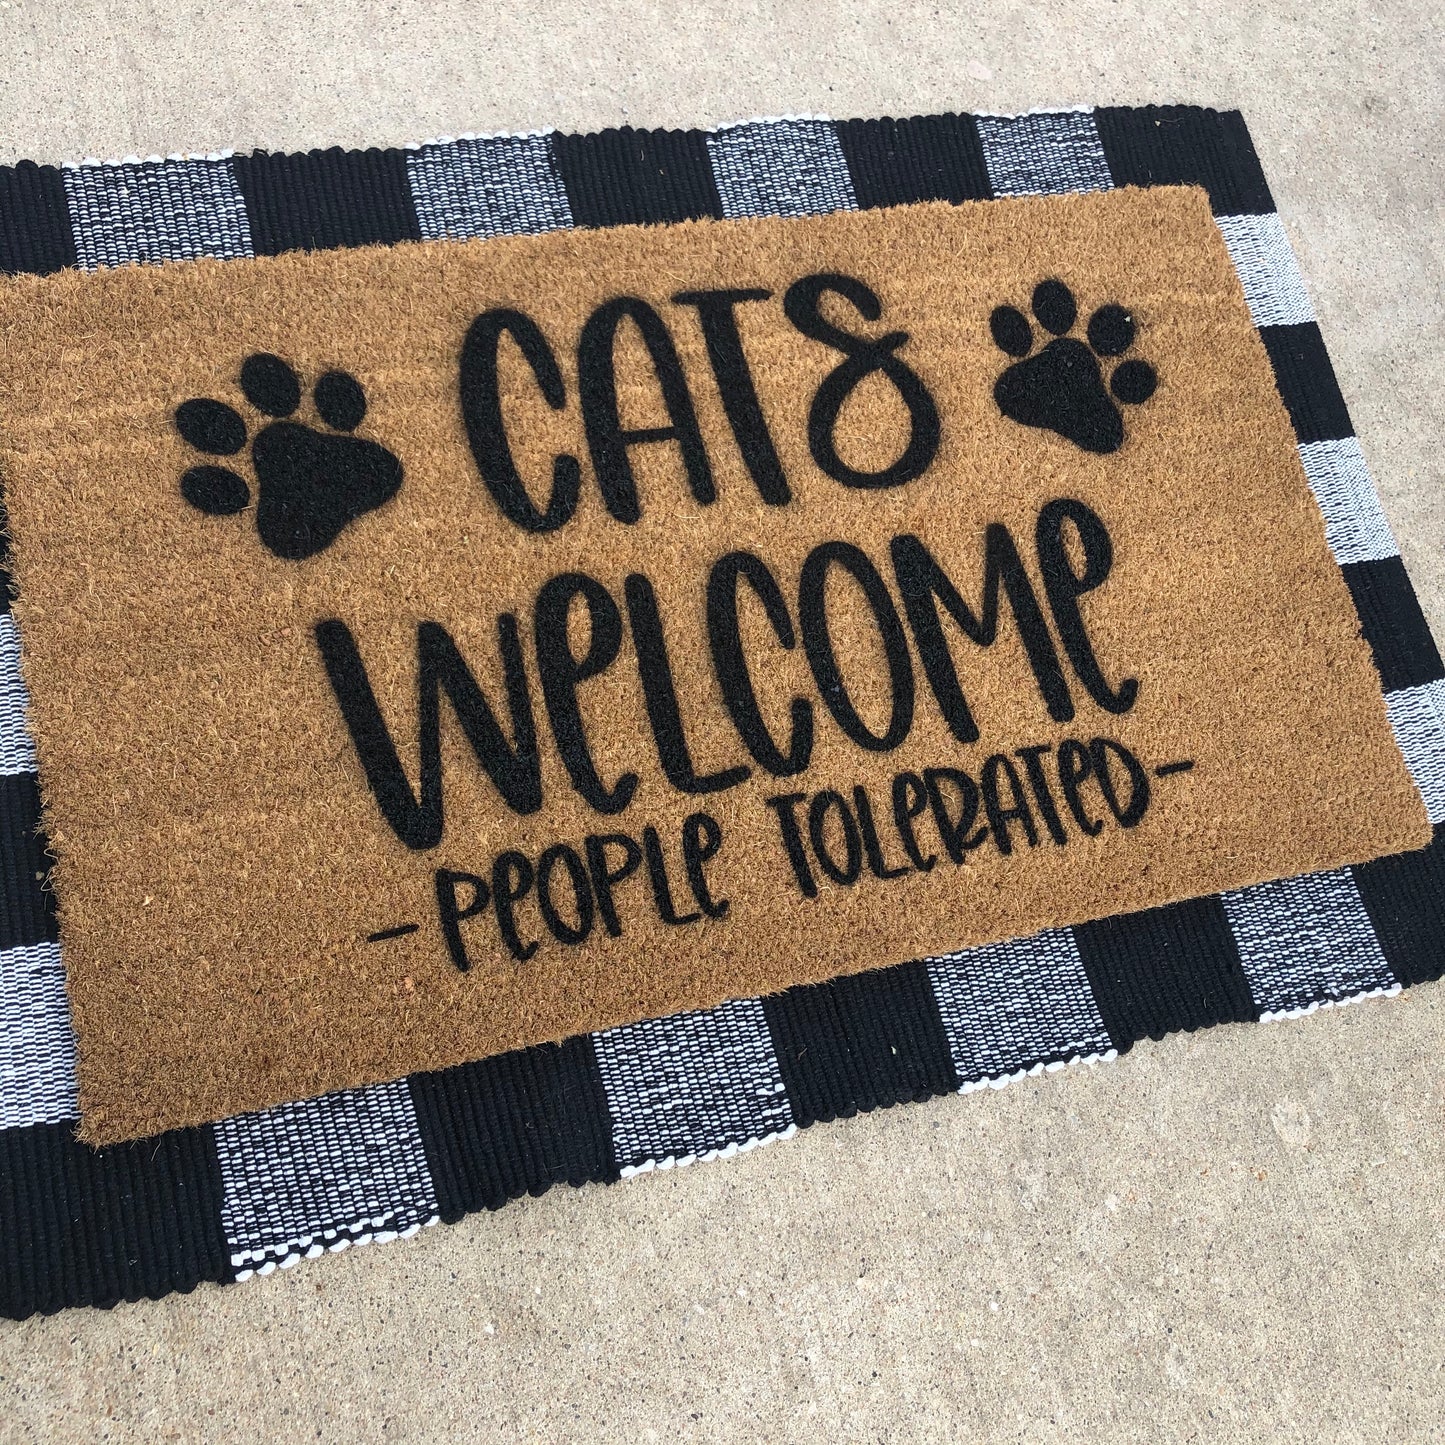 Cats Welcome People Tolerated Doormat